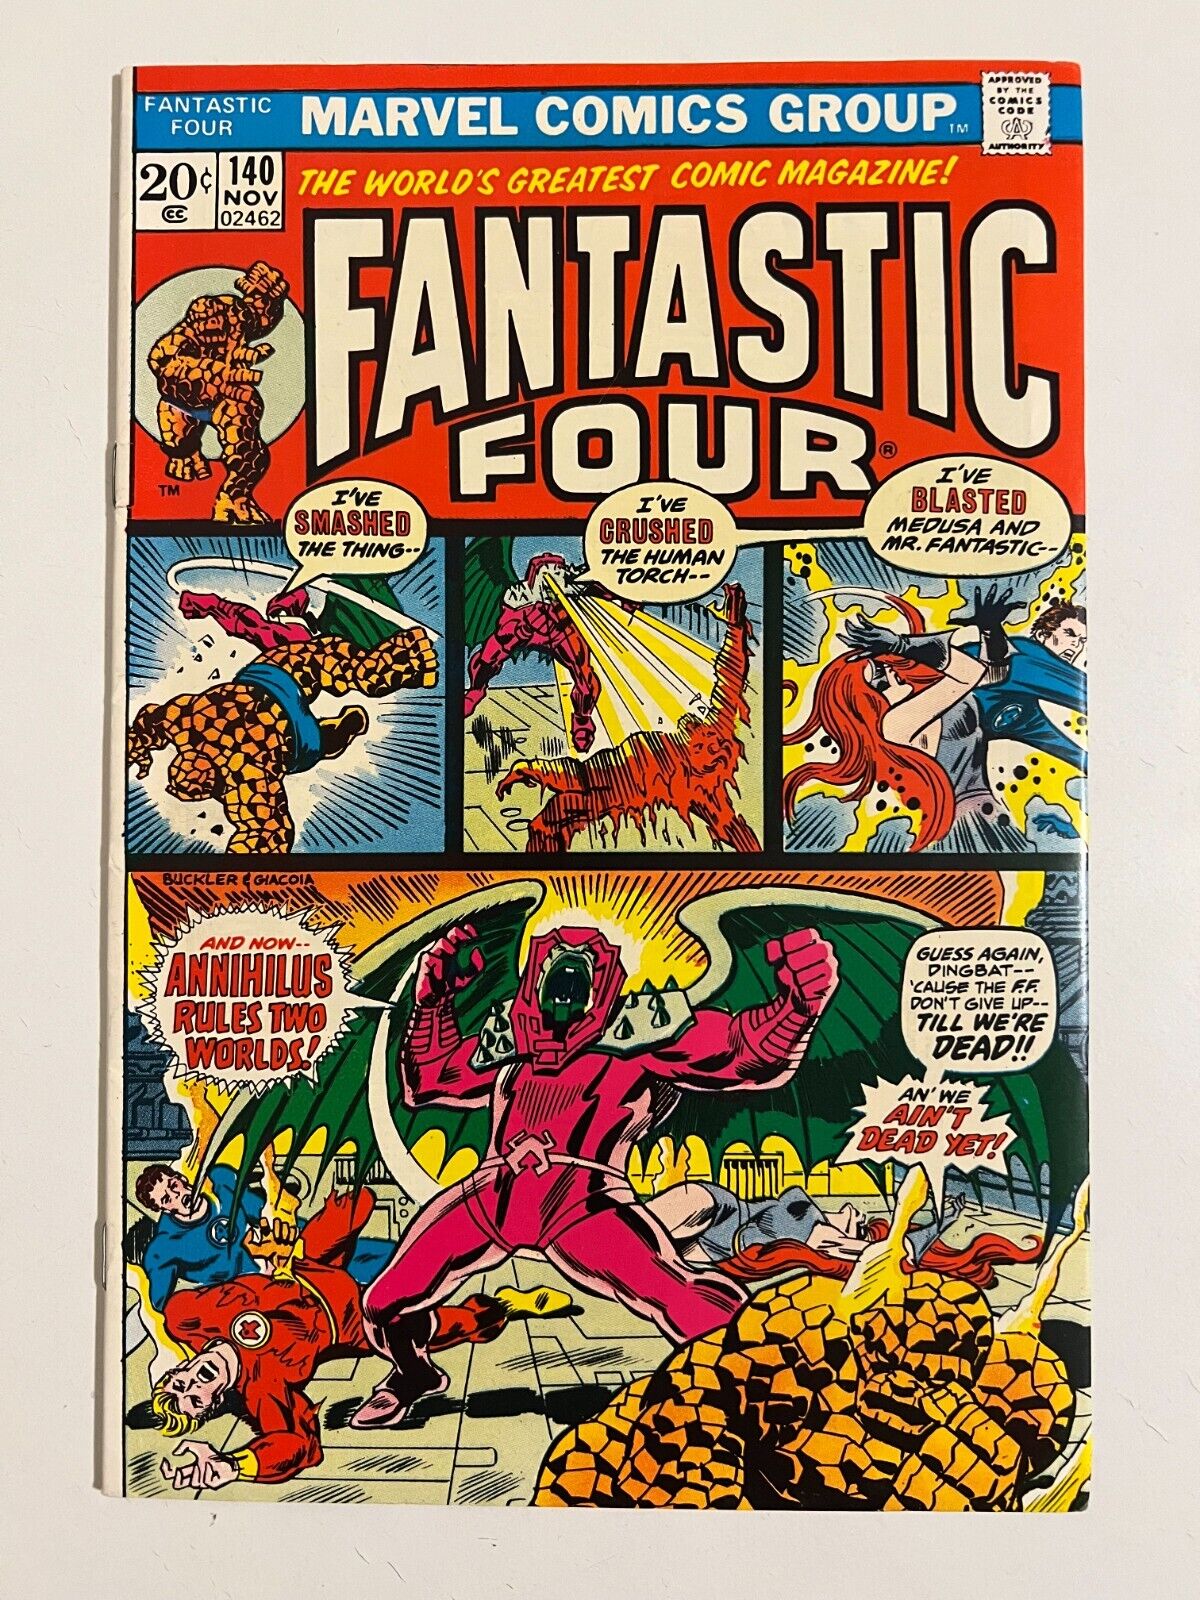 Fantastic Four #140 (VF-)